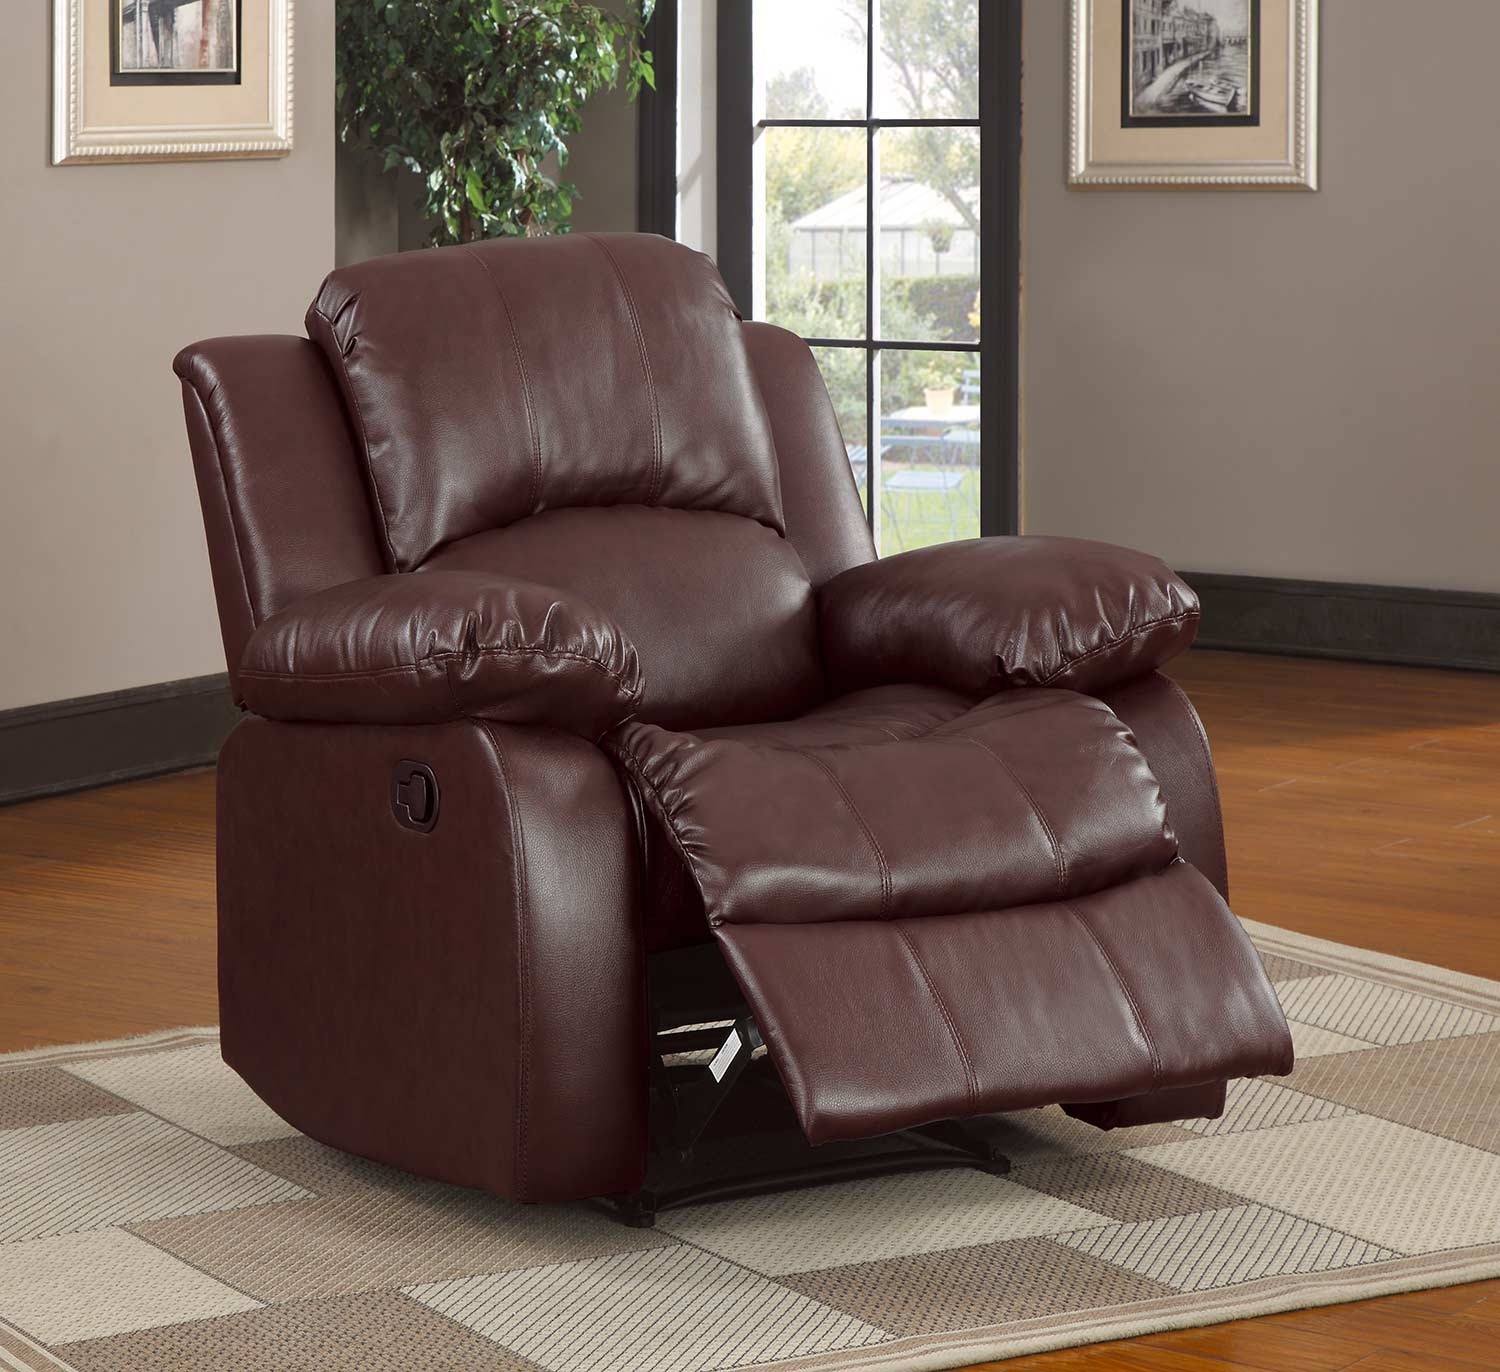 Homelegance 9700brw 1 Upholstered Recliner Chair Warm Brown Bonded 2 